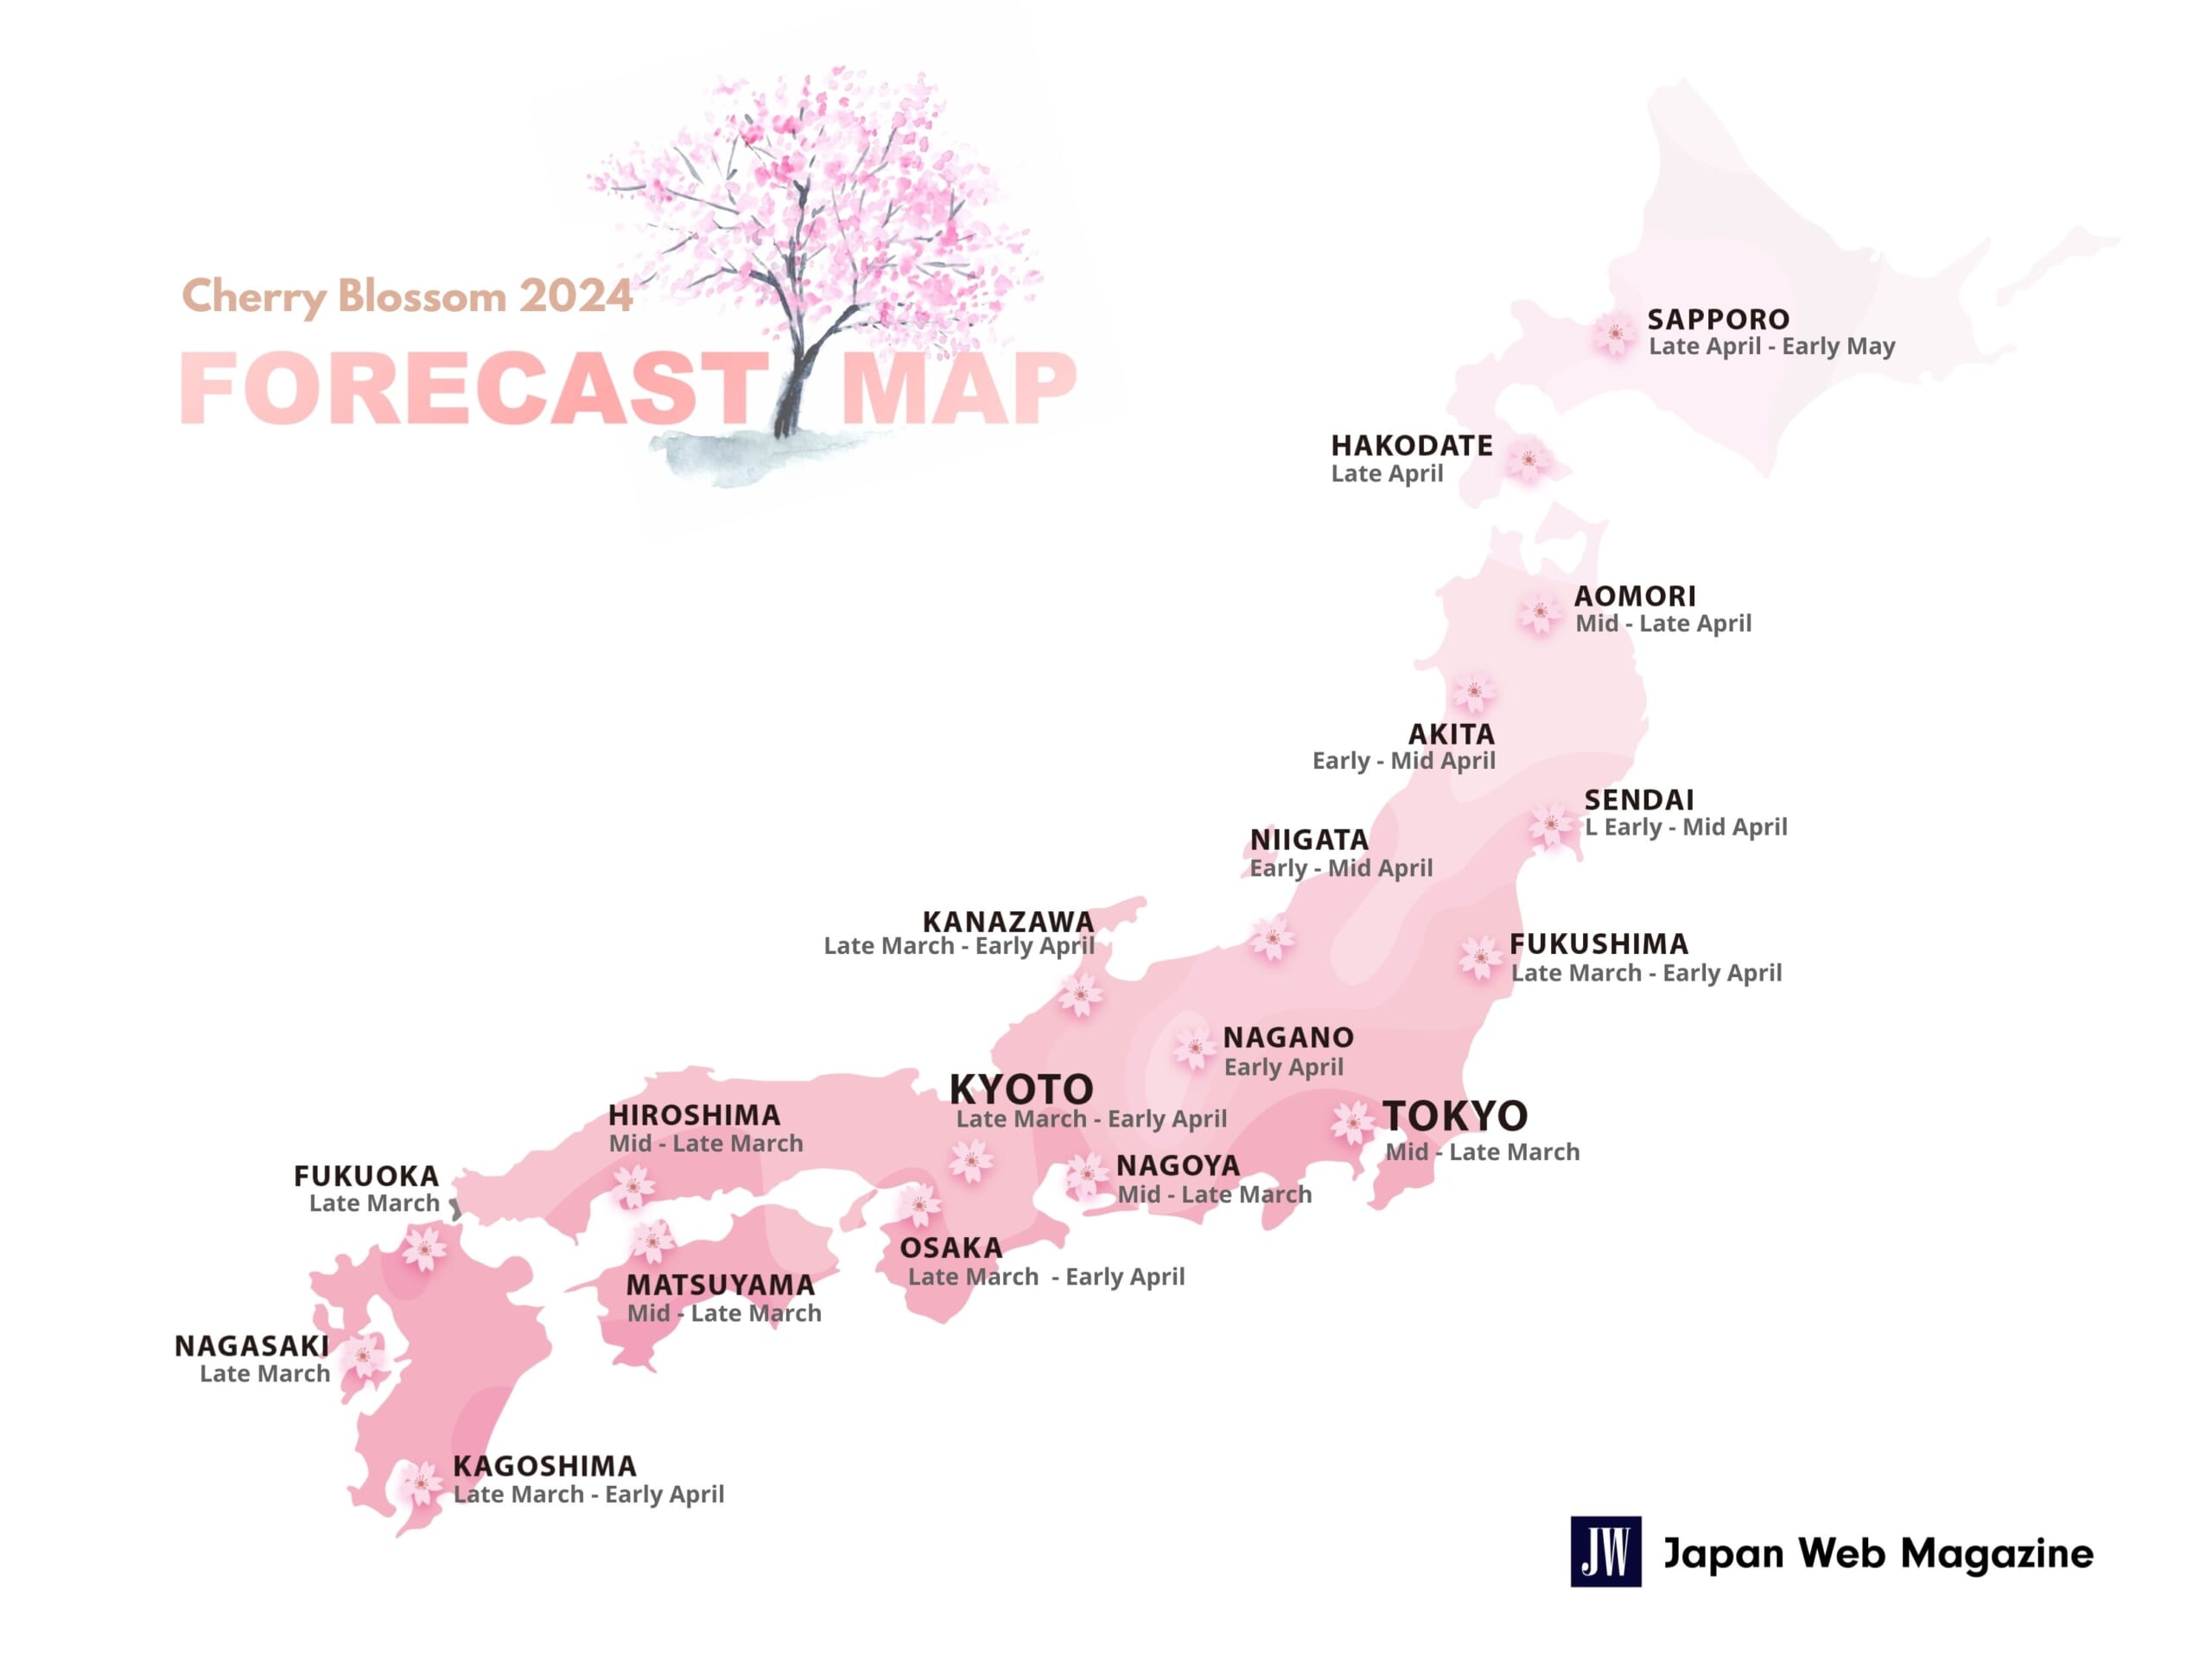 Cherry Blossom Forecast in Japan 2024 Japan Web Magazine